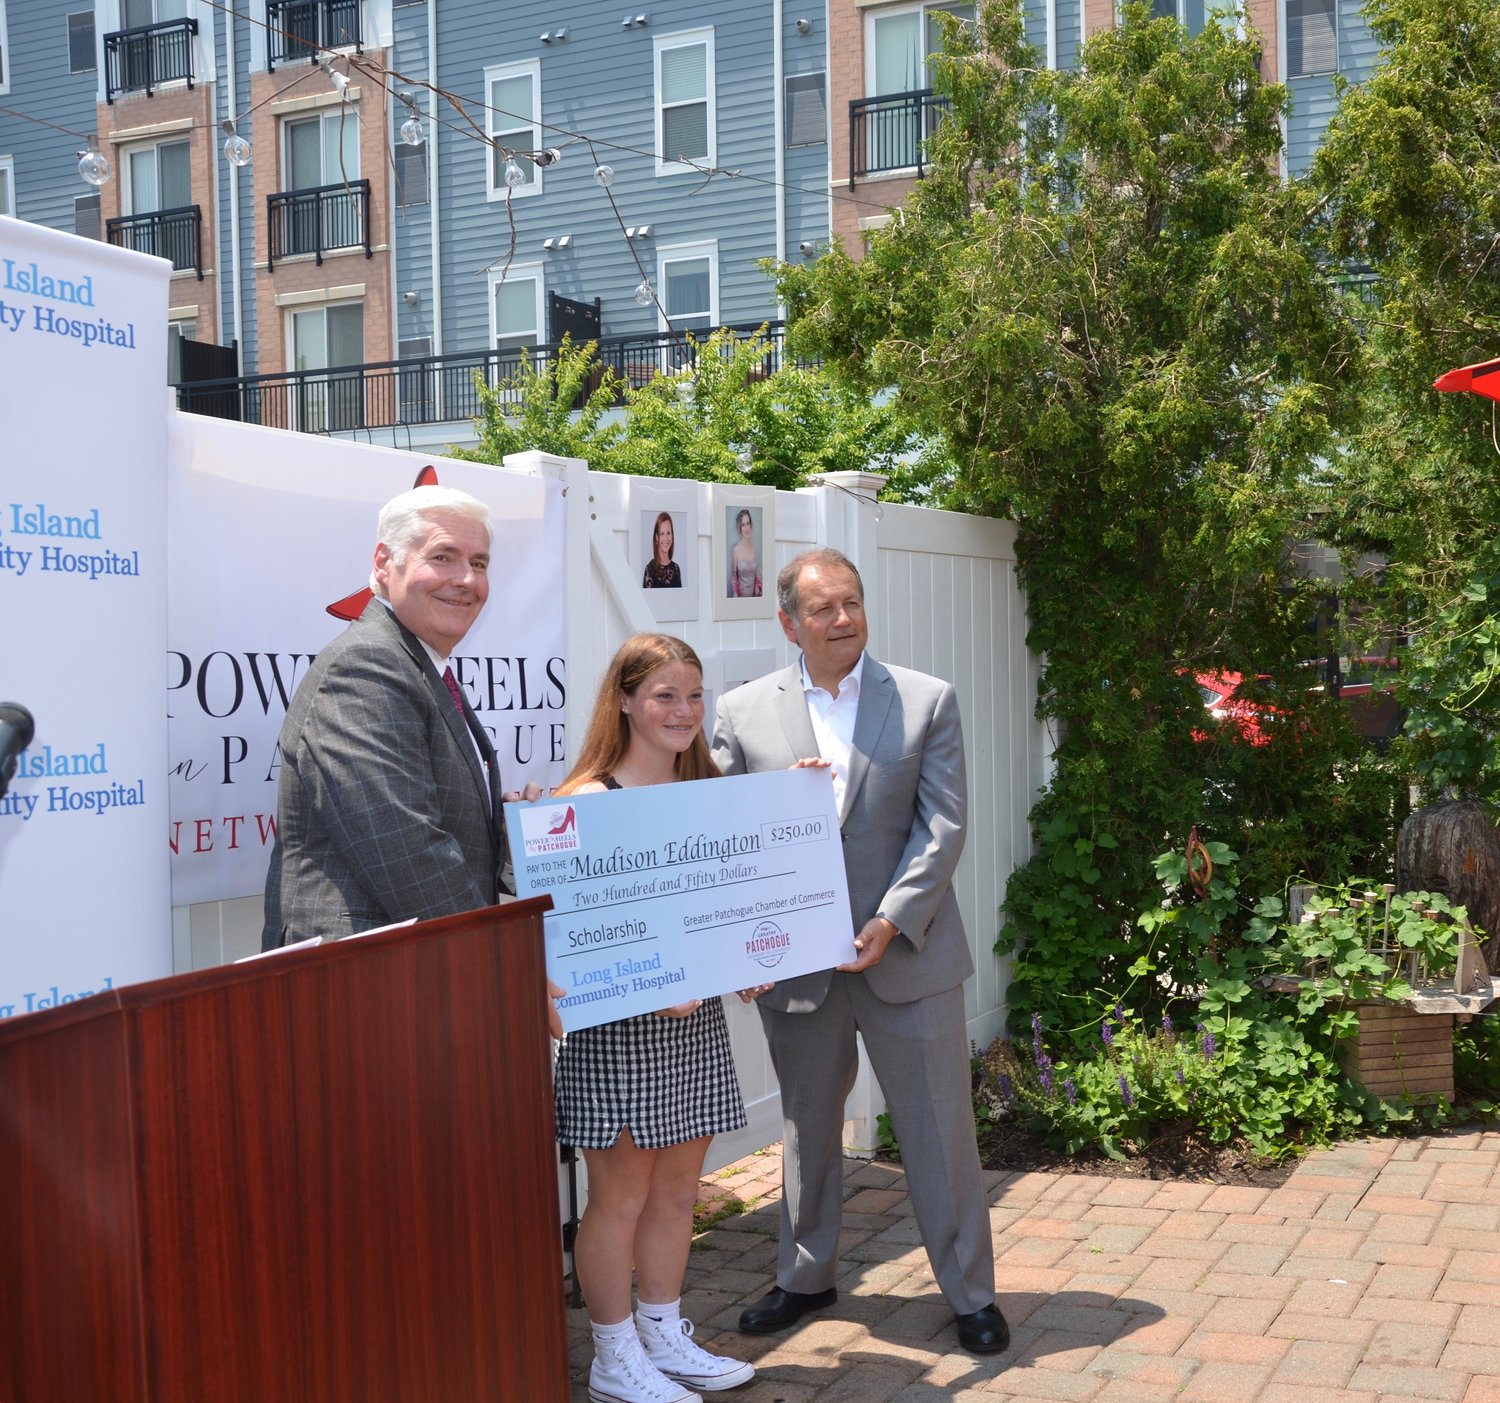 Richard T. Margulis (left) and David Kennedy present Madison Eddington with her $250 scholarship.